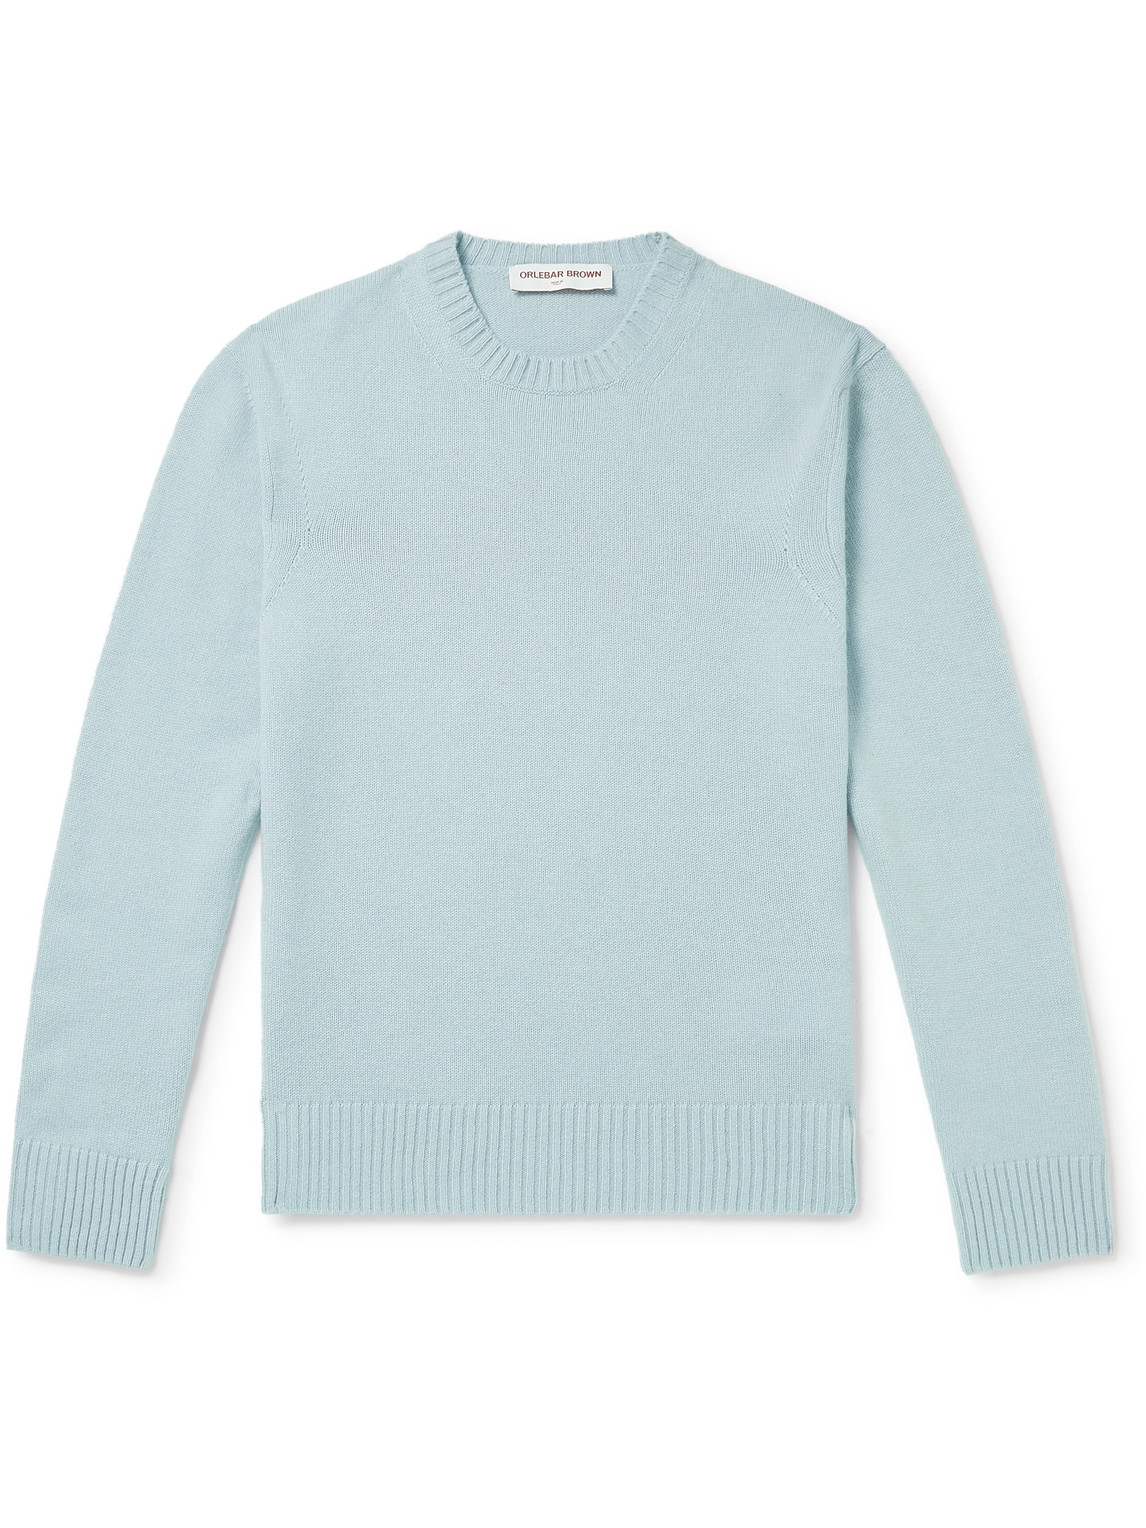 Orlebar Brown Lorca Cashmere Sweater In Blue